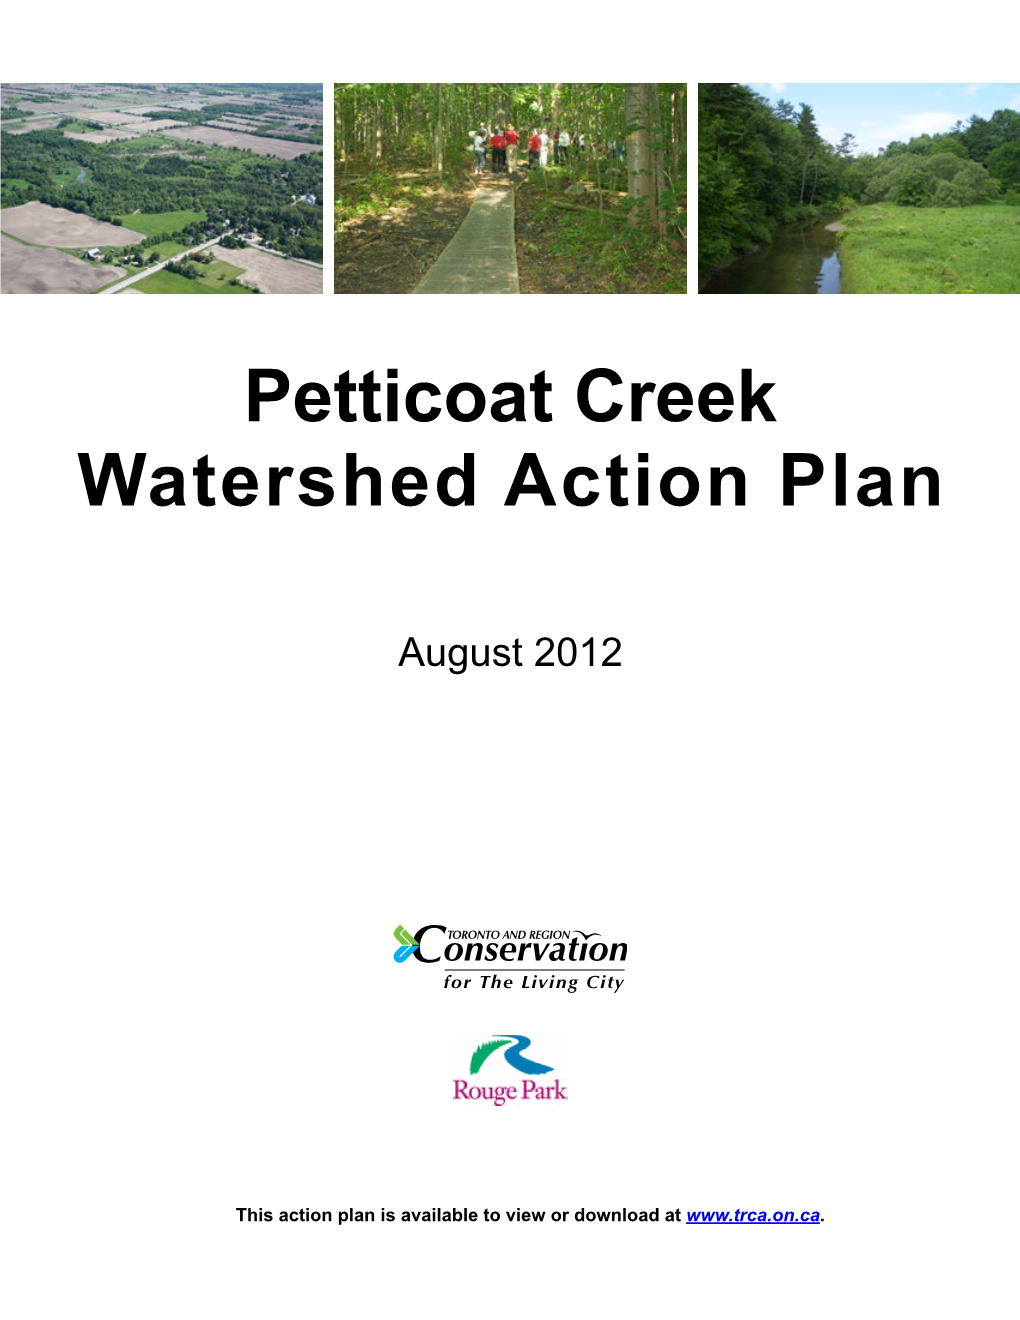 Petticoat Creek Watershed Action Plan